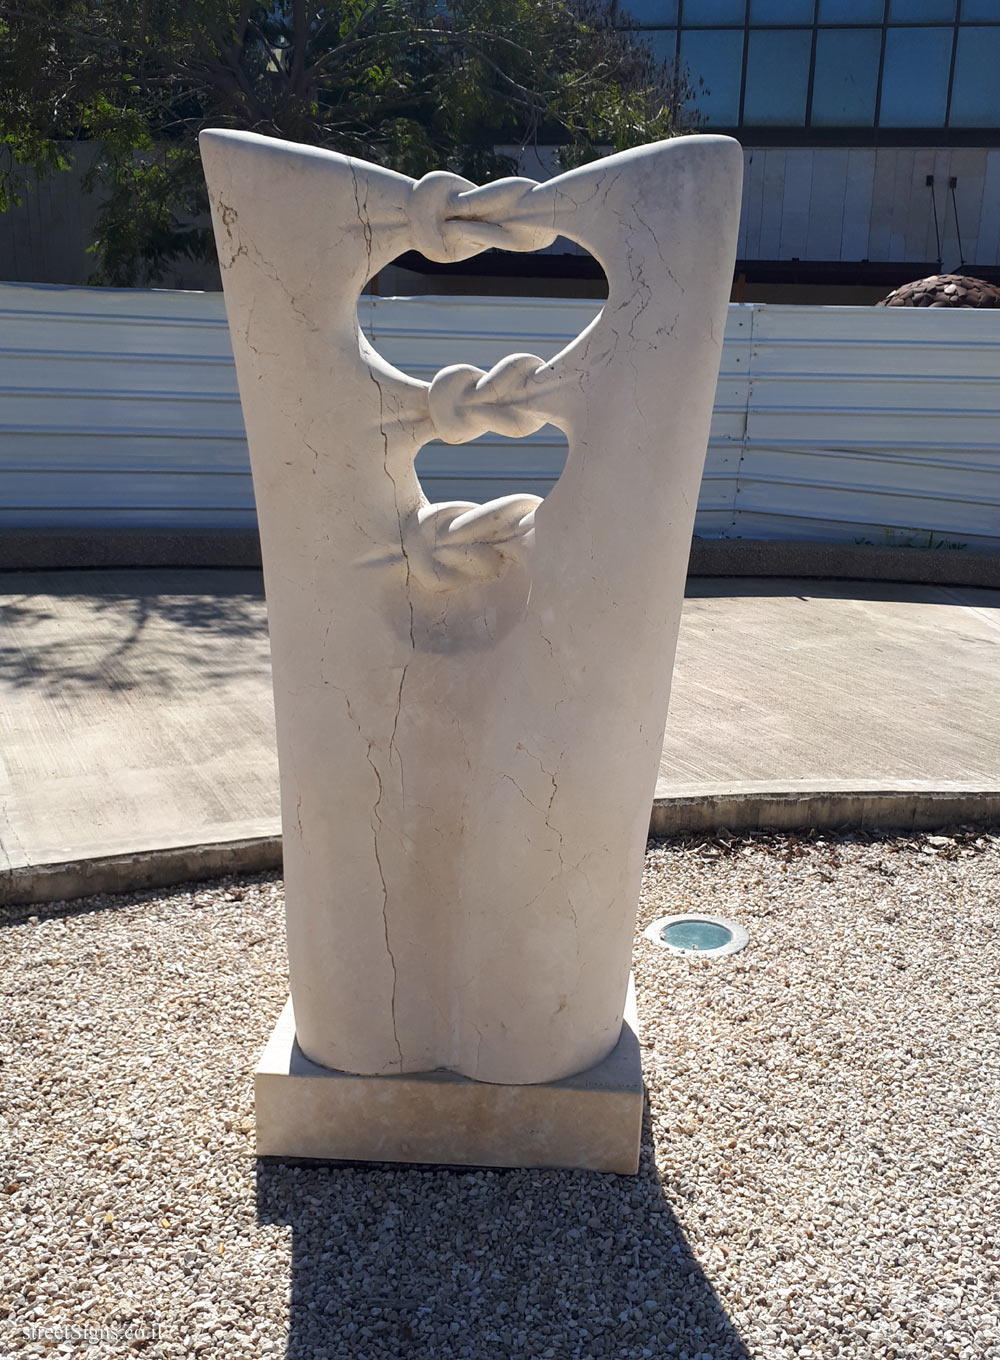 Tel Hashomer Hospital- Sculpture Garden - "Double" Igor Brown outdoor sculpture - Ramat Gan, Israel